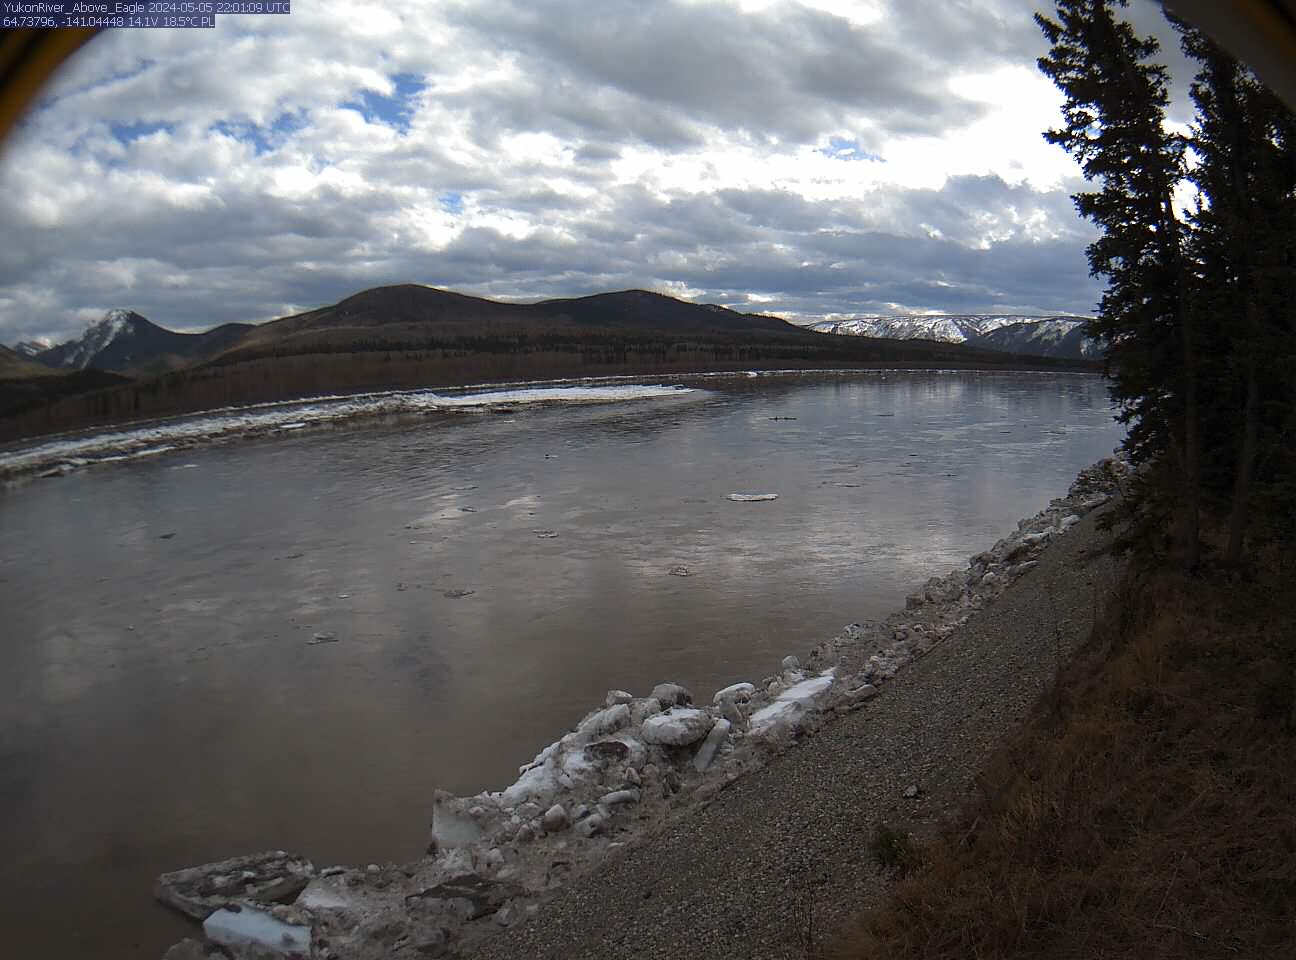 Yukon River above Eagle Latest Images